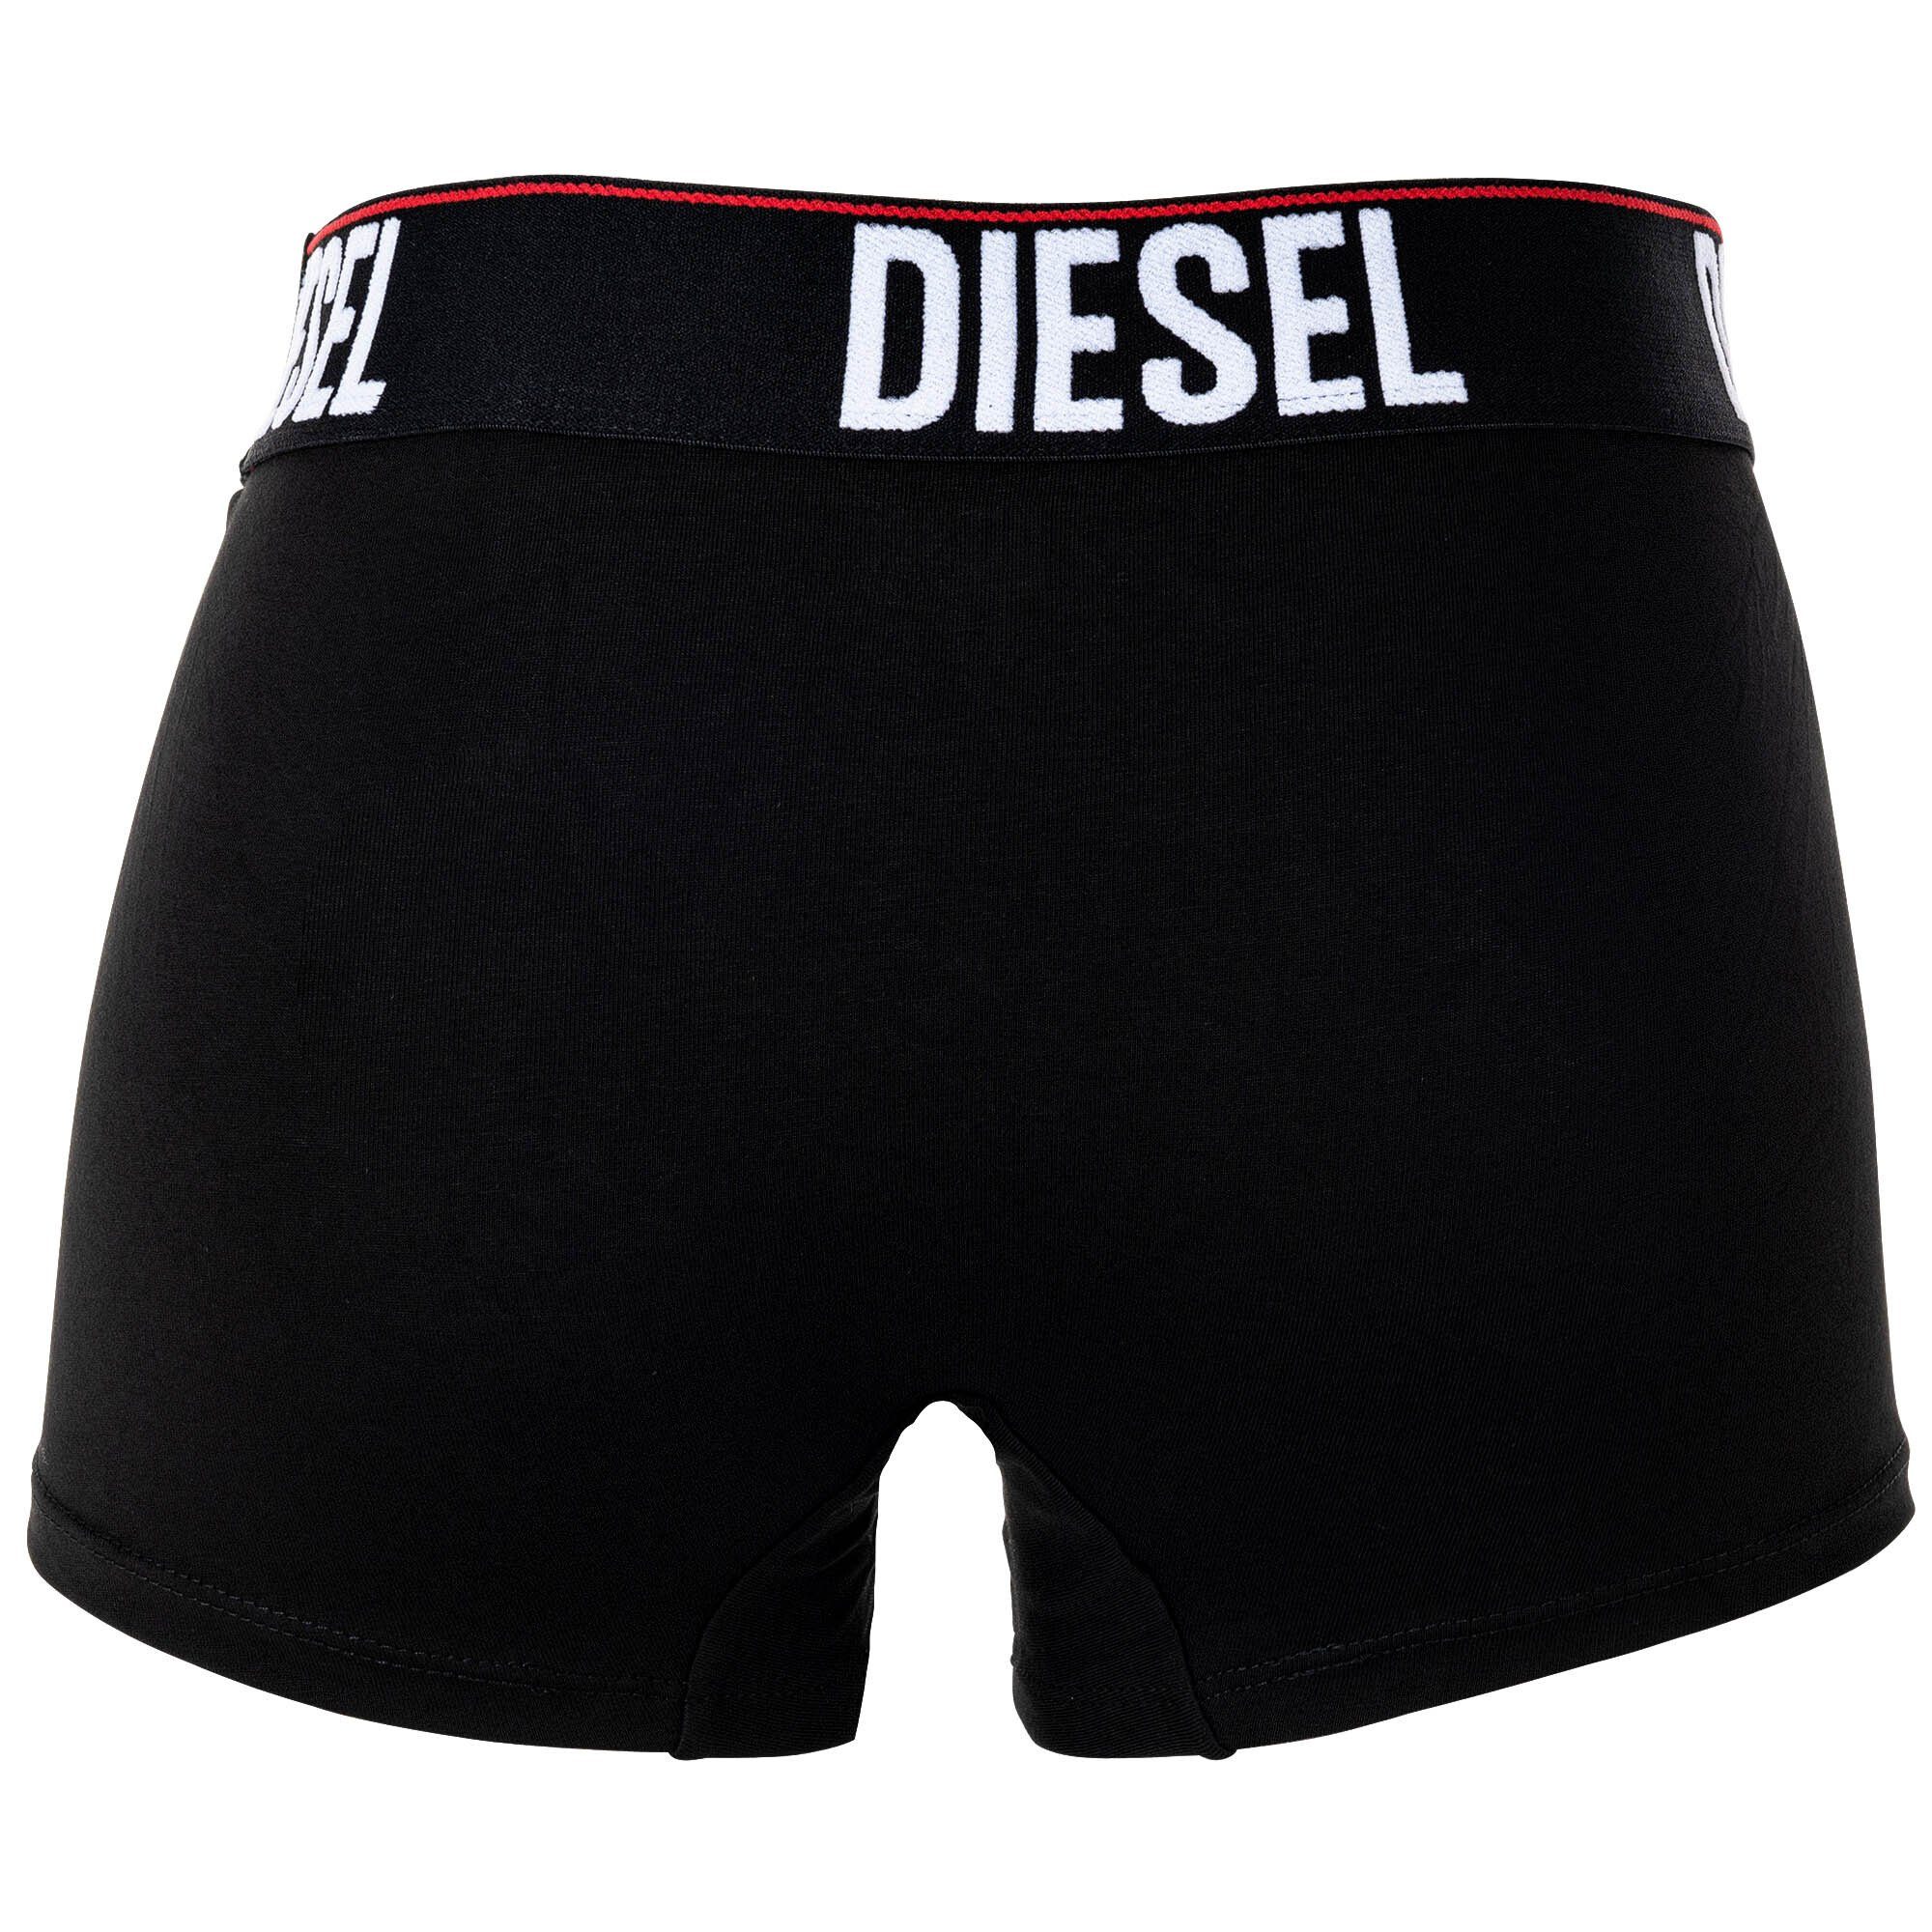 Diesel Herren - Pack Boxershorts, 3er Boxer